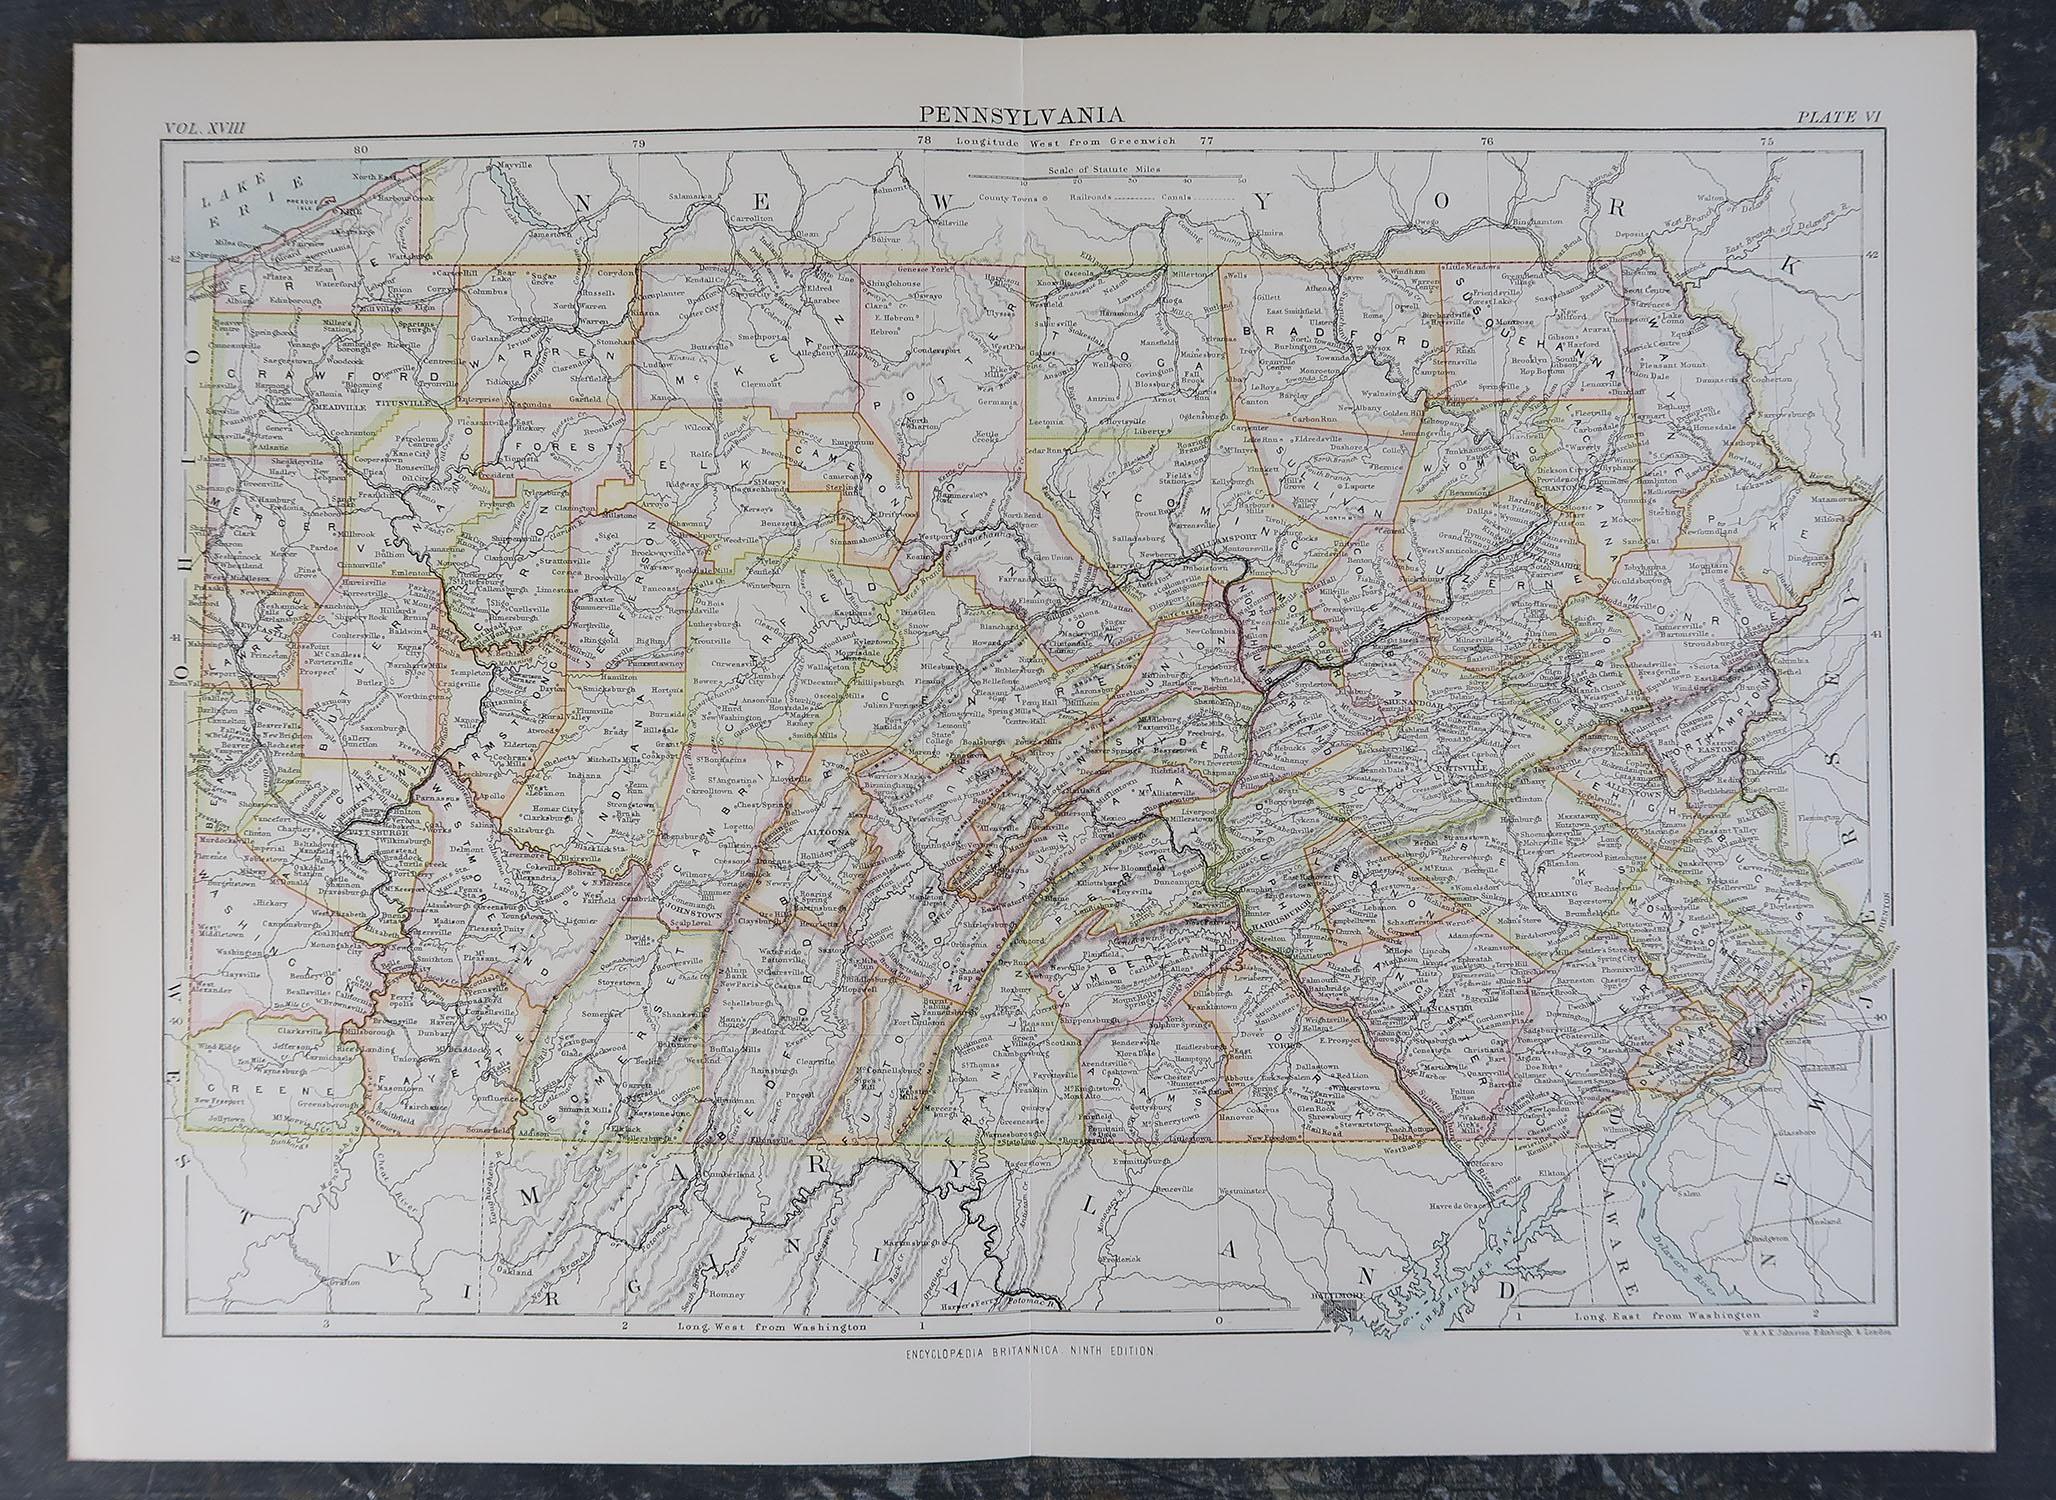 Scottish Original Antique Map of The American State of Pennsylvania, 1889